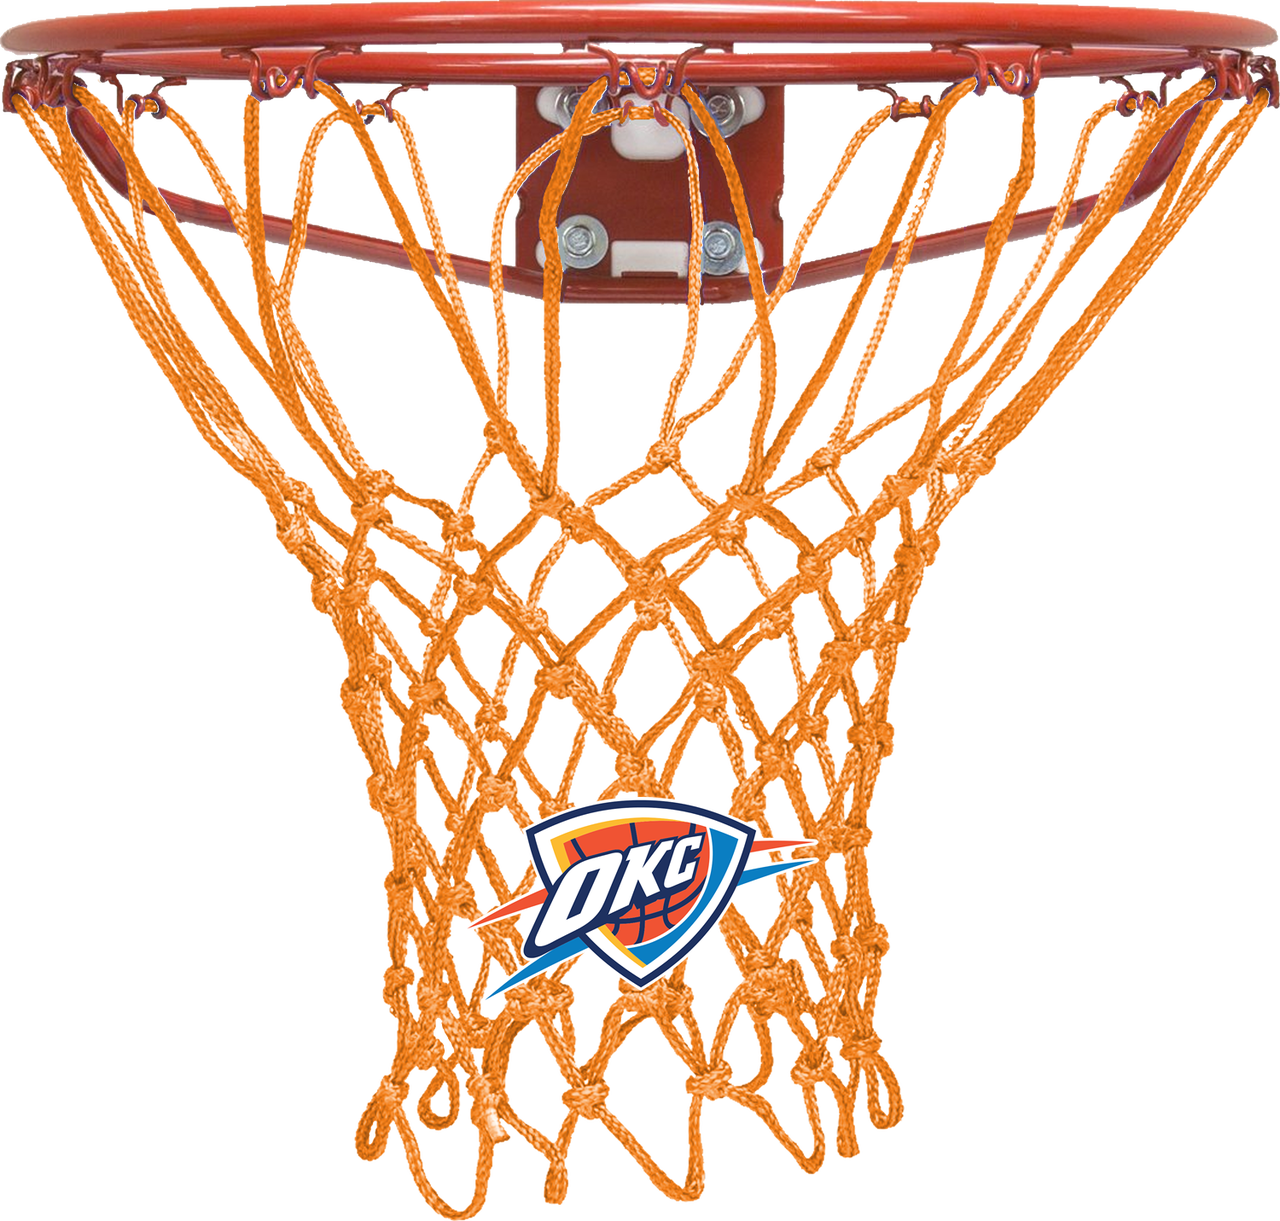 Bague de basket-ball Image Transparente